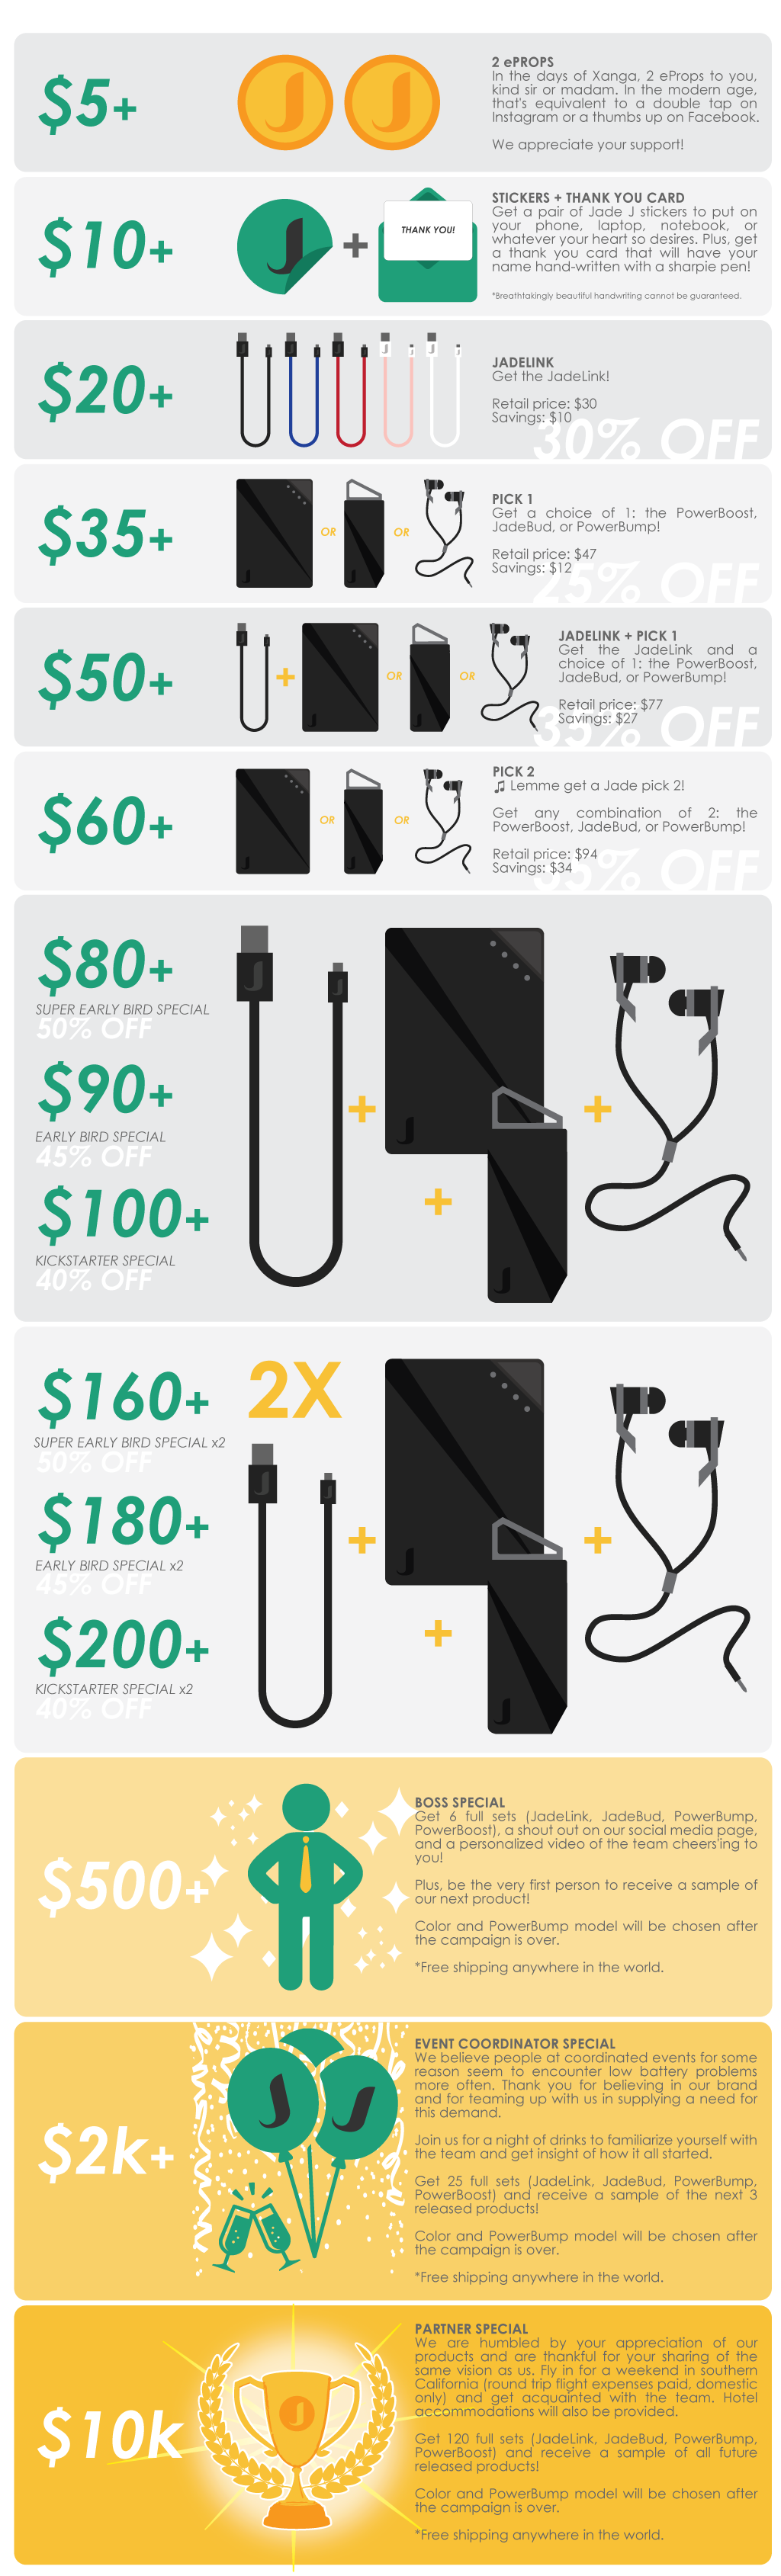 Kickstarter crowdfunding power bank tech Earbuds USB Cables keychain